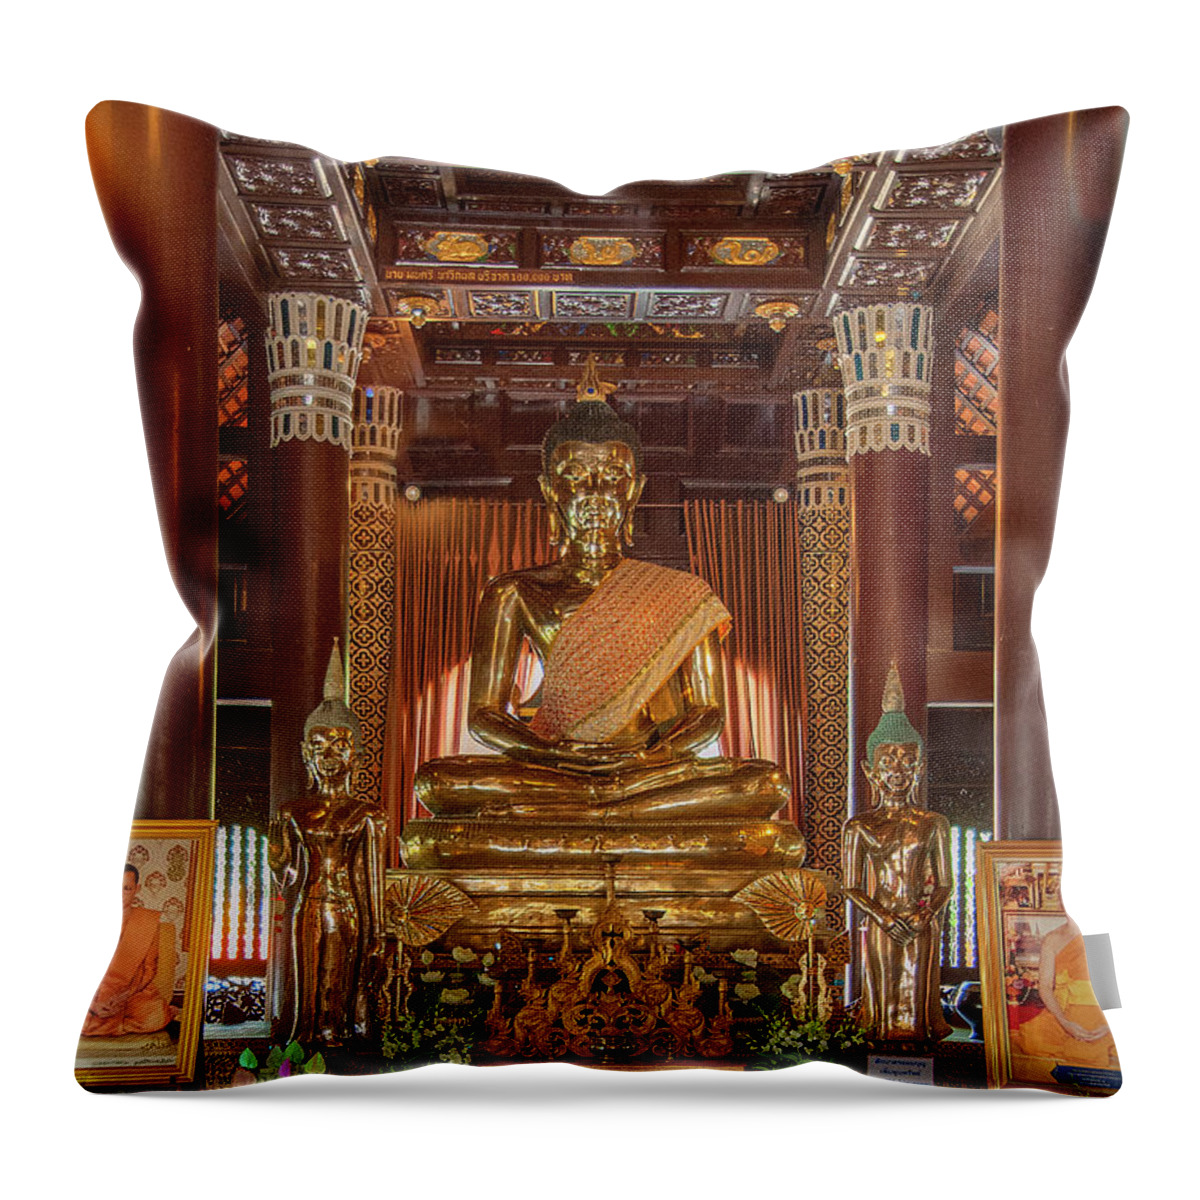 Scenic Throw Pillow featuring the photograph Wat Lok Molee Phra Wihan Buddha Images DTHCM2000 by Gerry Gantt